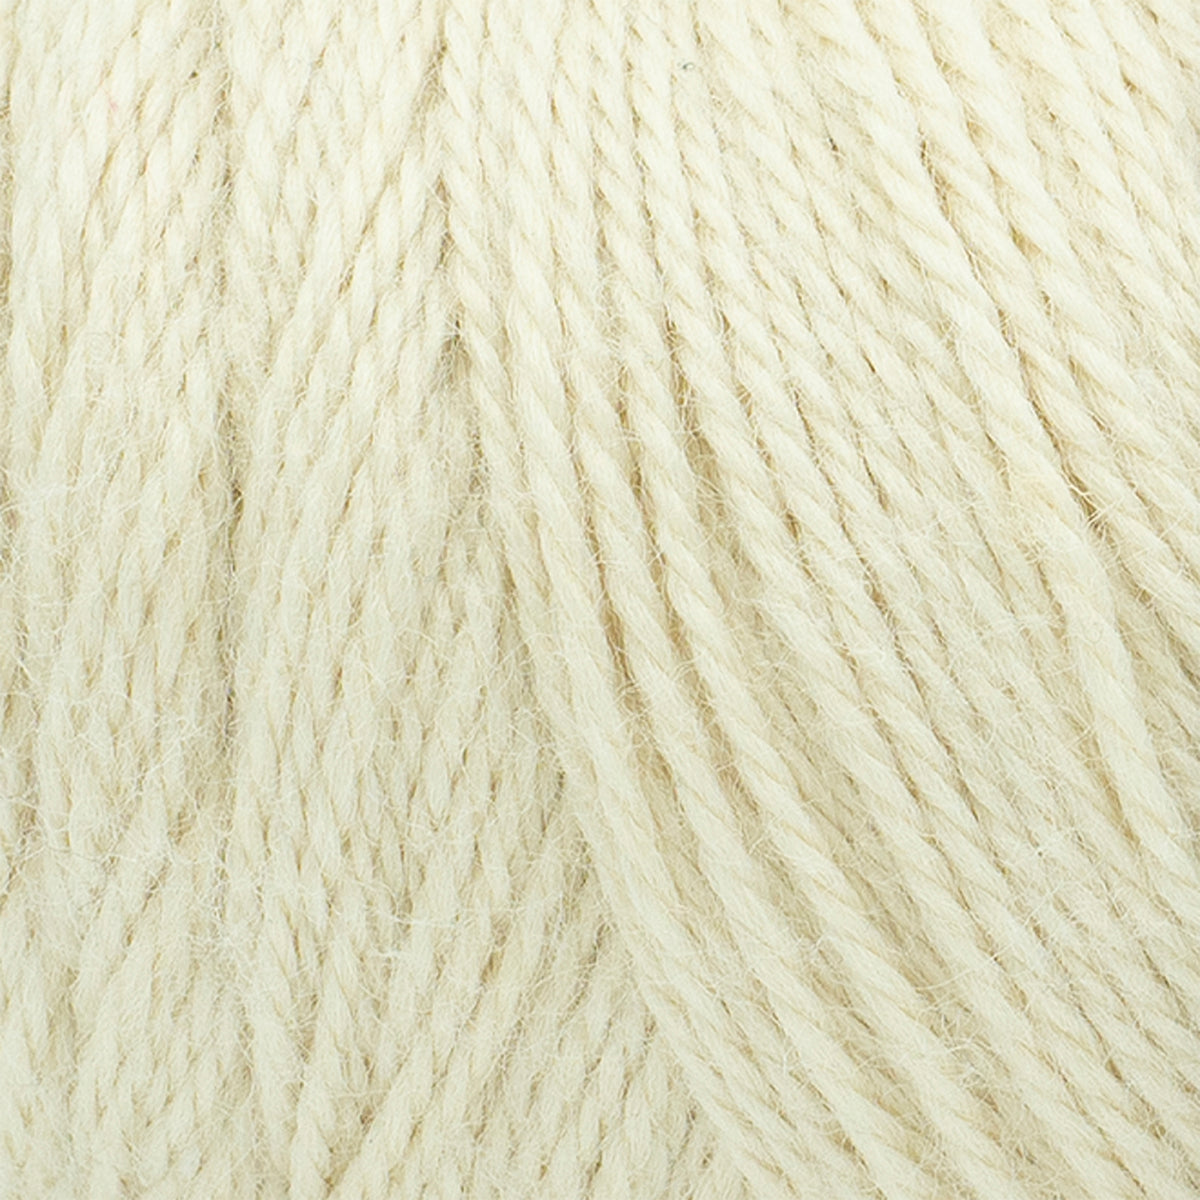 Amigurumi Lion Pattern (Crochet) – Lion Brand Yarn